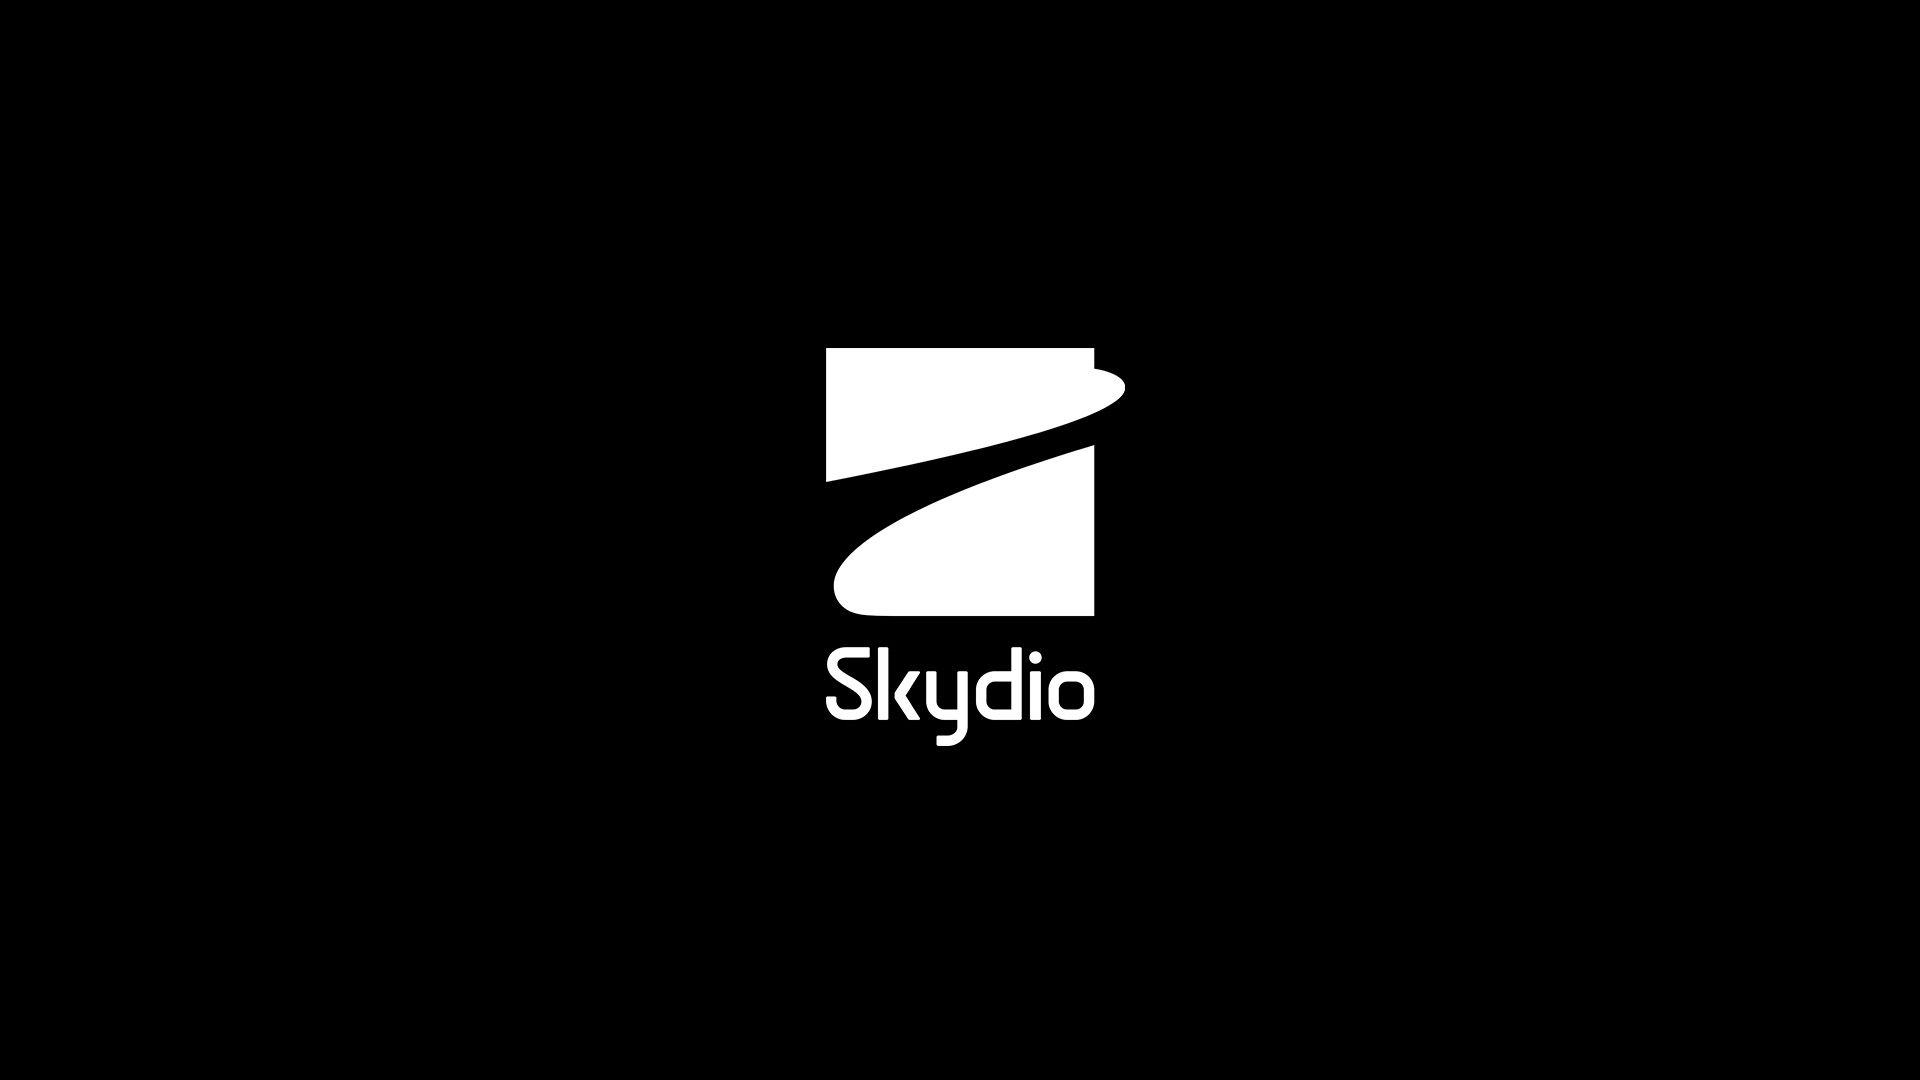 Skydio Logo on black